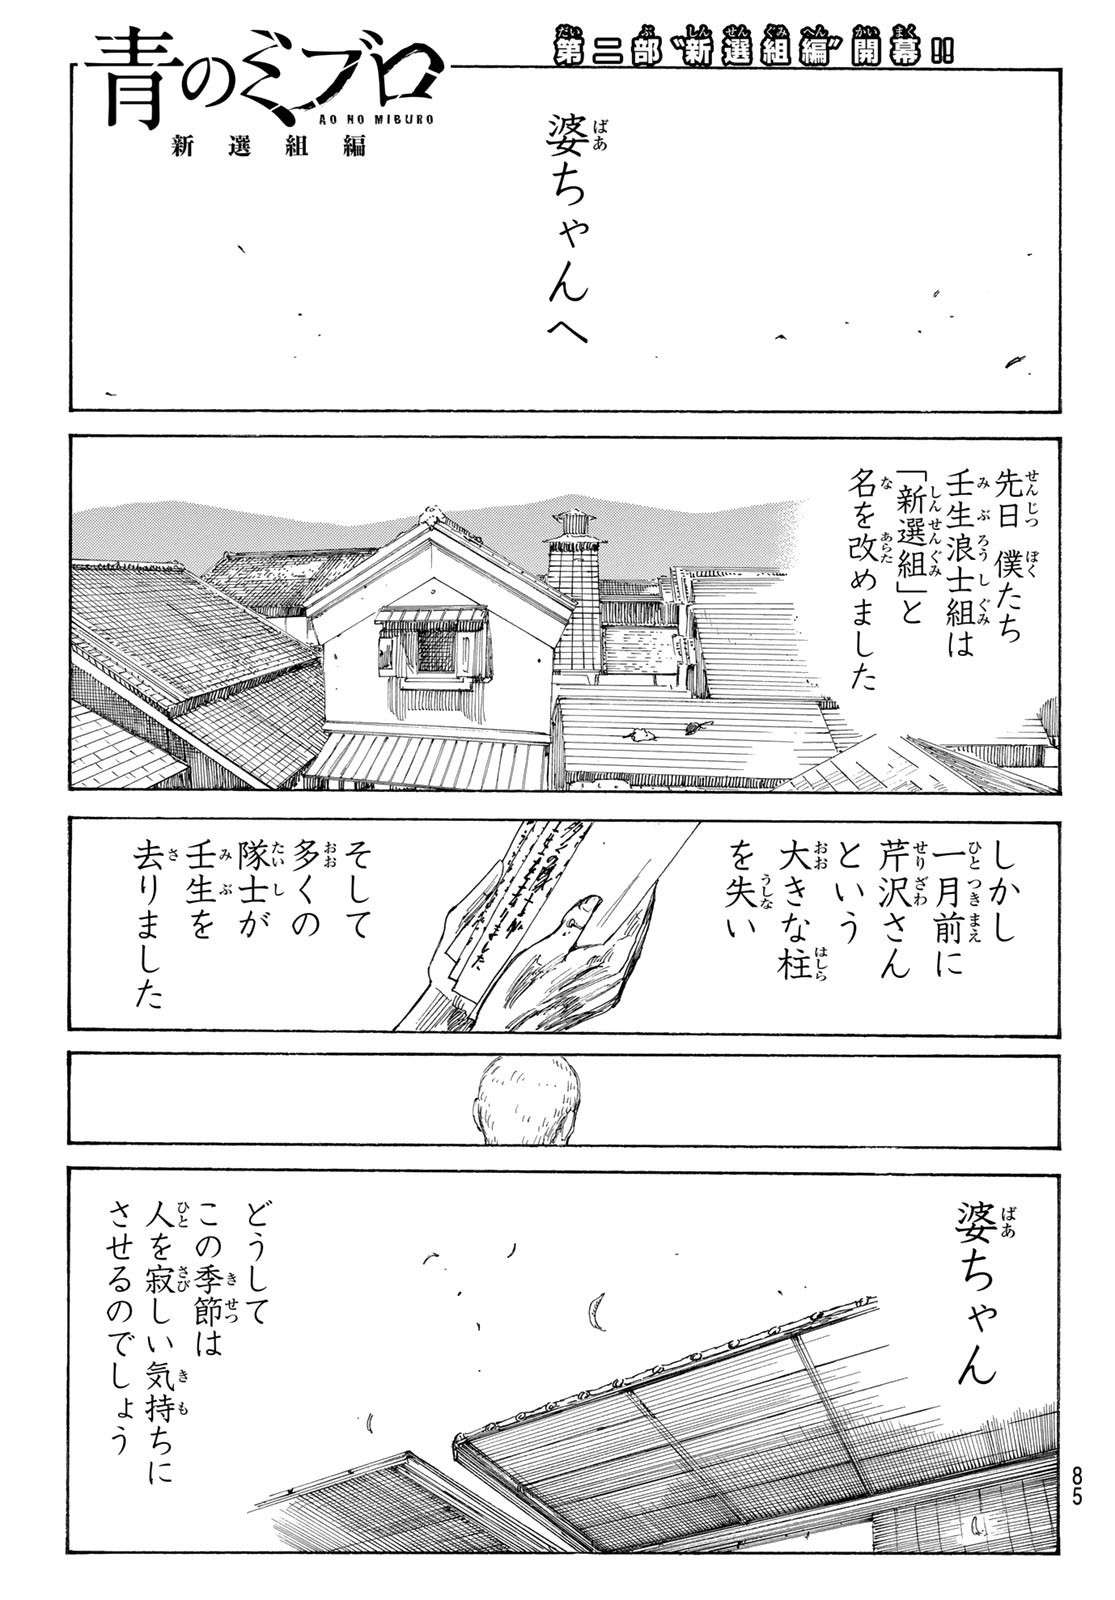 Ao no Miburo - Chapter 123 - Page 3